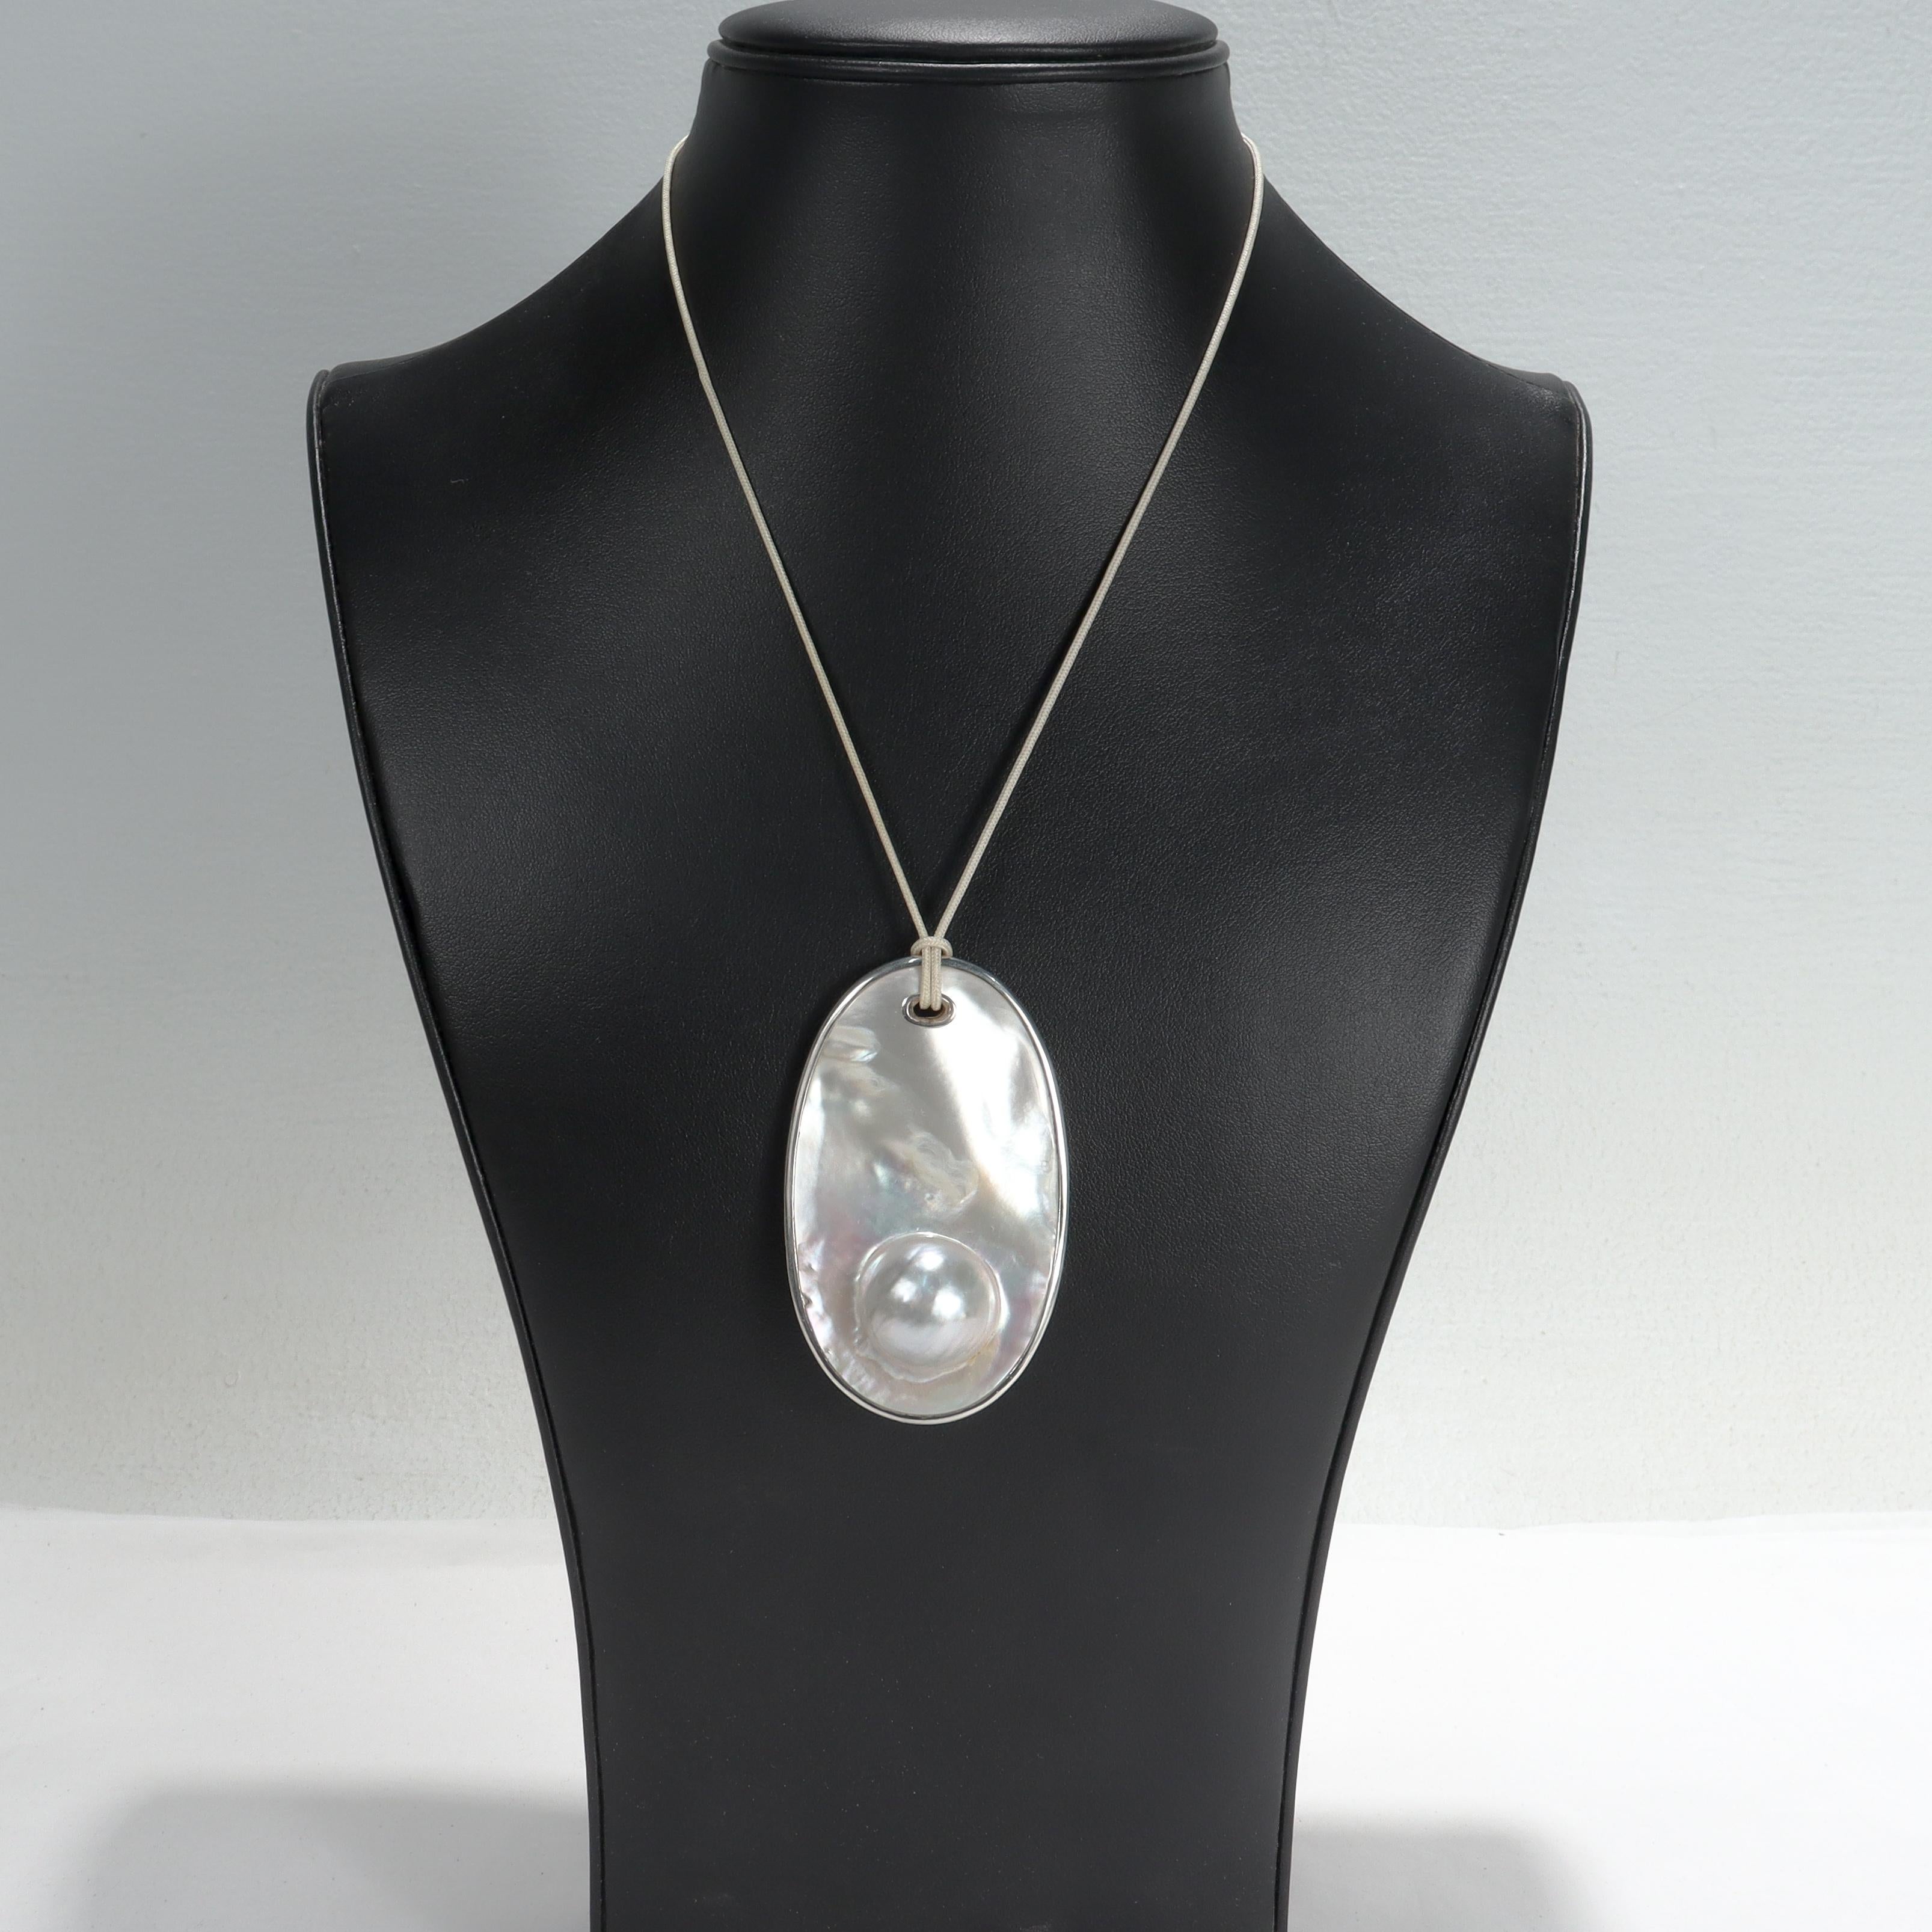 Women's or Men's Elsa Peretti Tiffany & Co. Blister Pearl & Sterling Silver Pendant Necklace